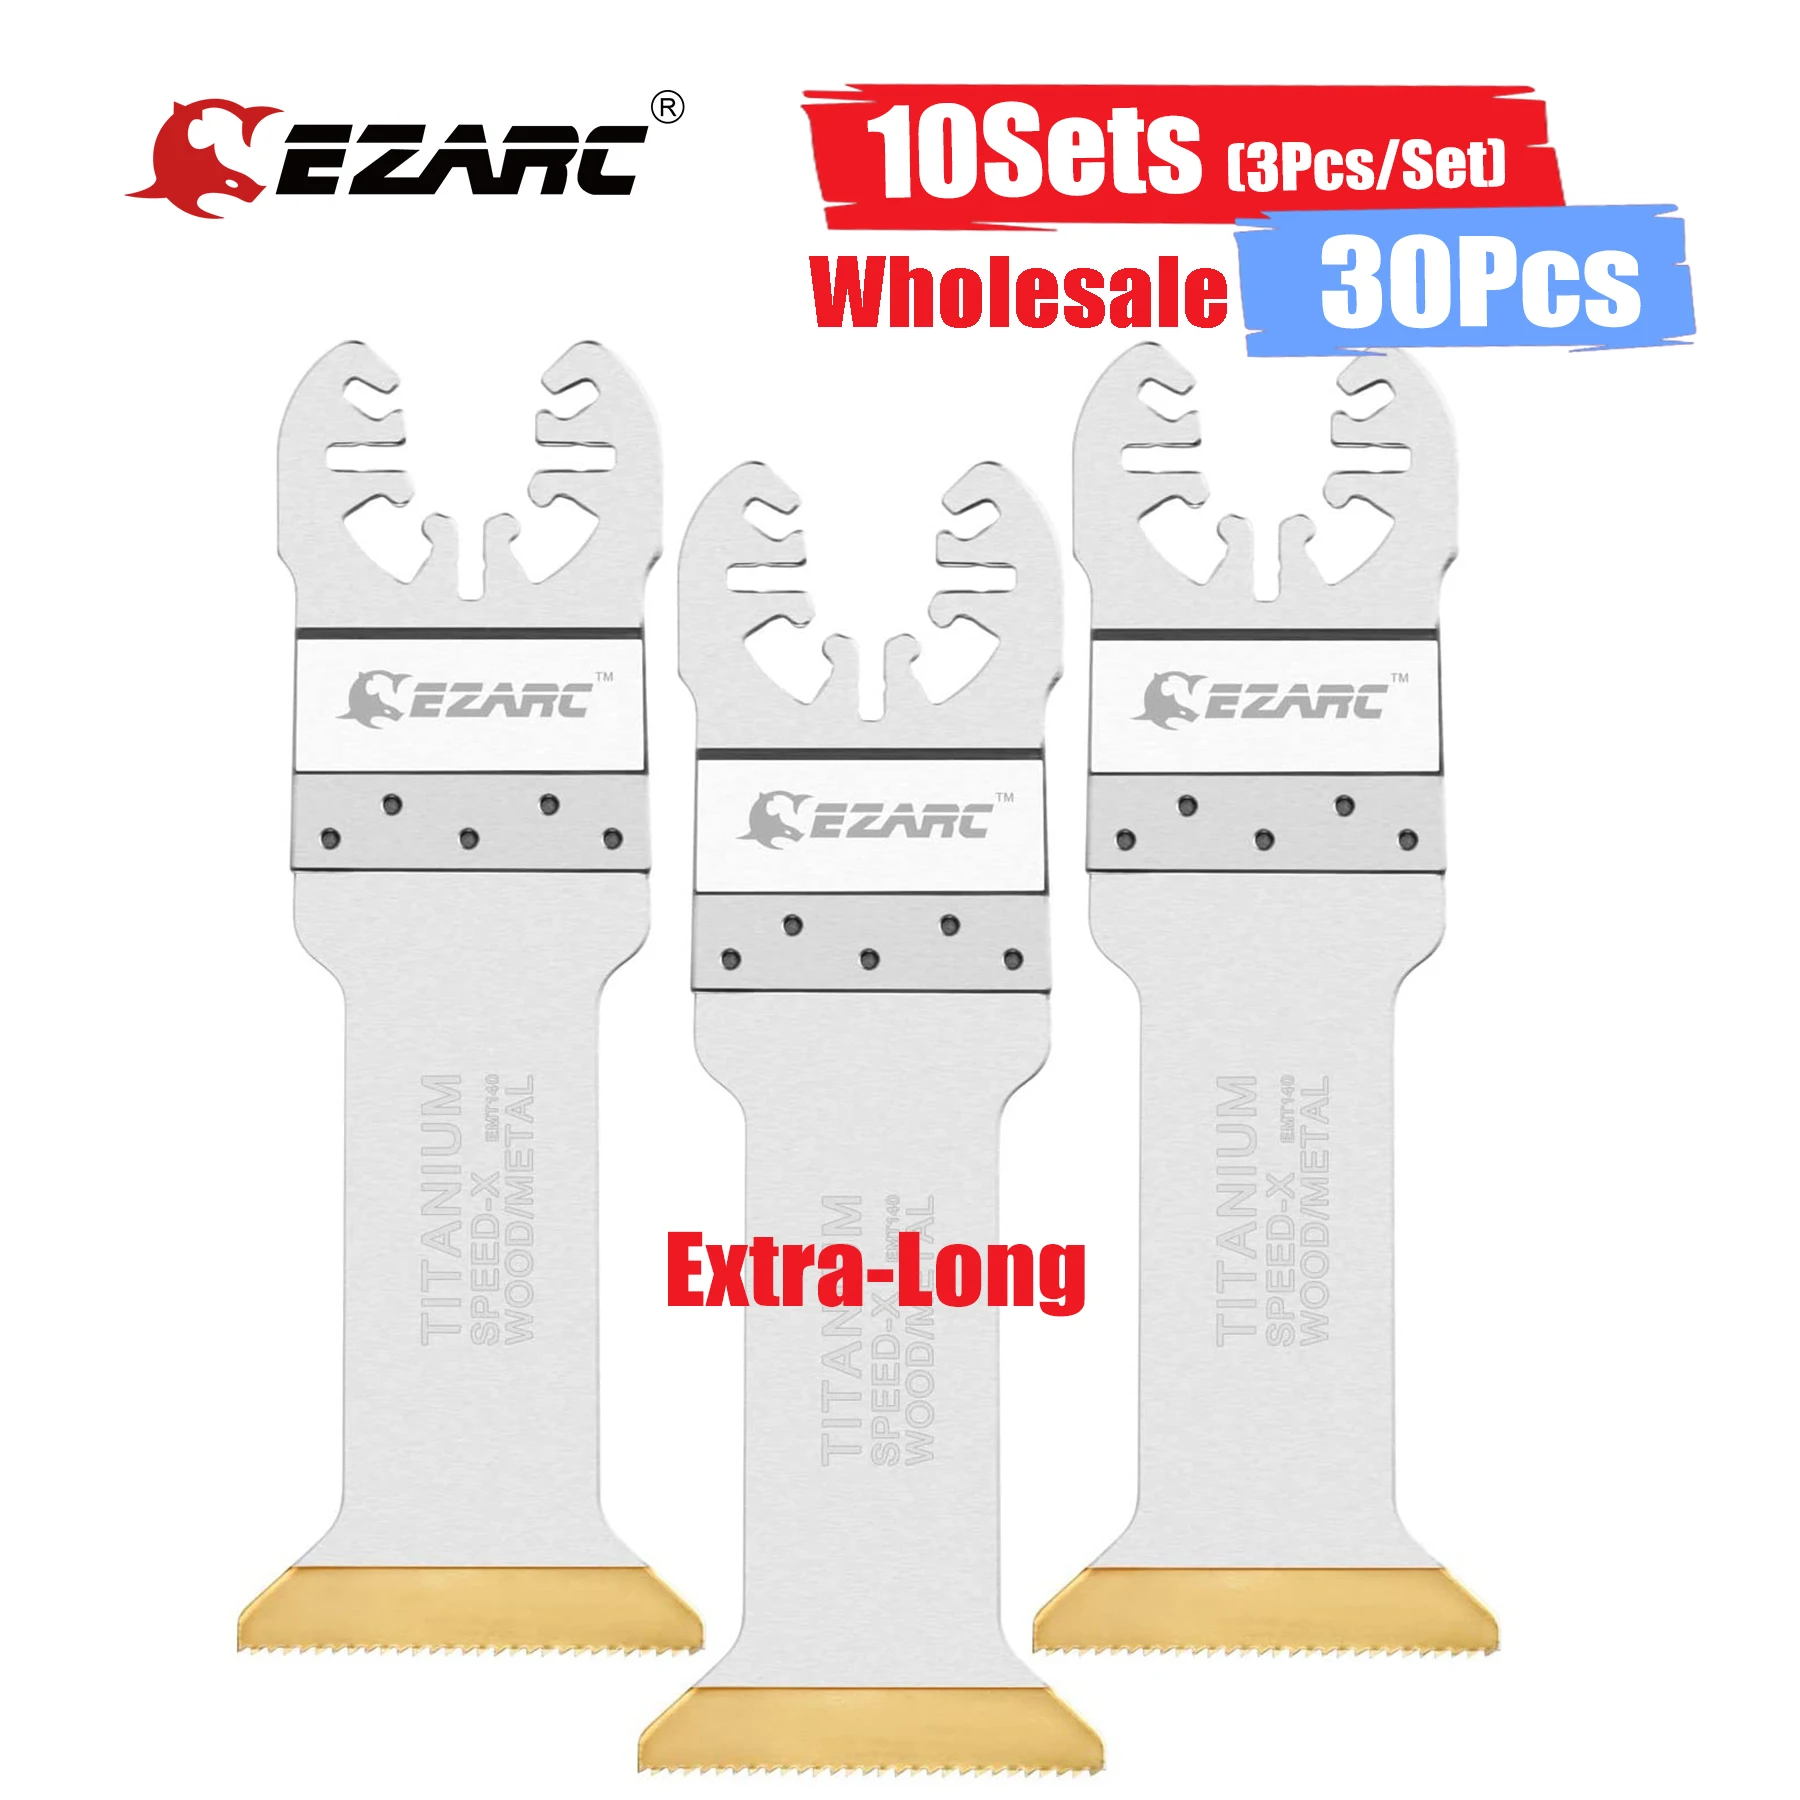 EZARC 10Sets(3pcs/Set) Titanium Oscillating Blades Multitool Oscillating Saw Blades Tools Accessories for Wood and Metal Cutting